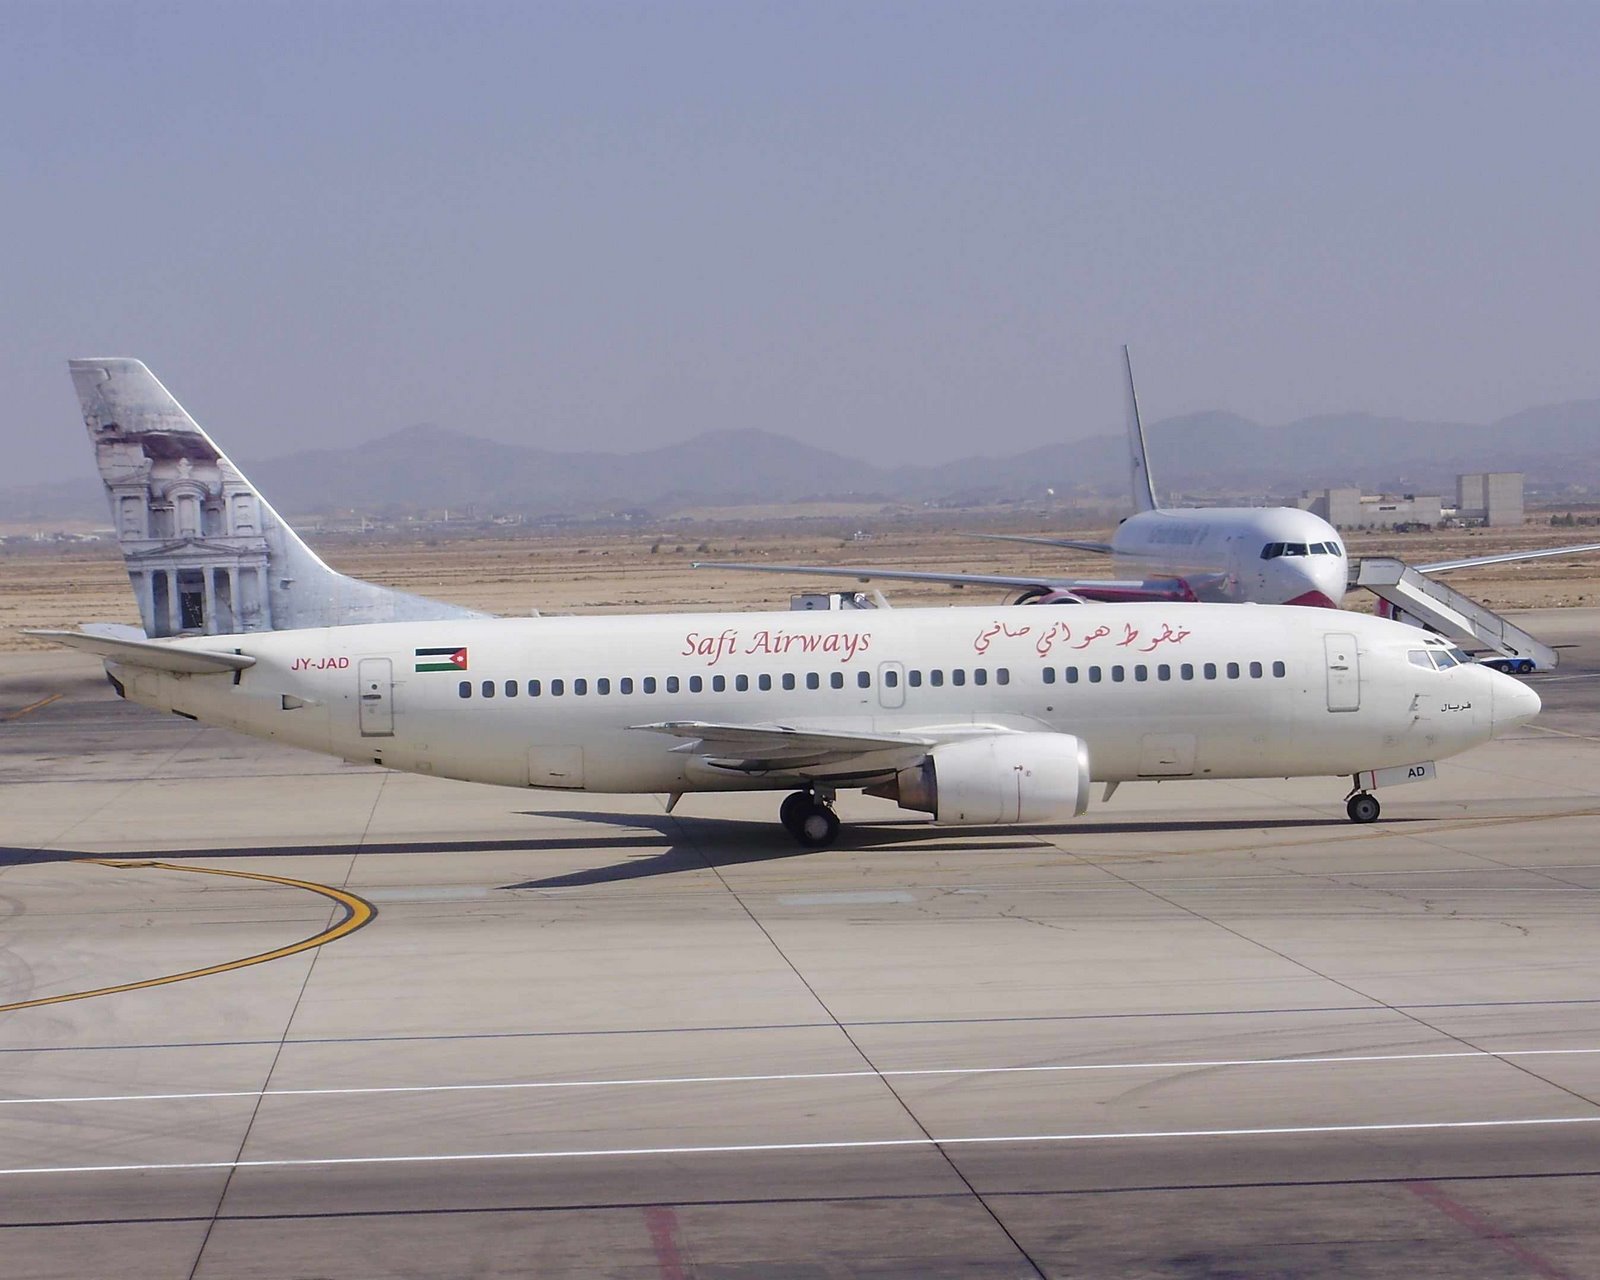 [Safi+Airways+737-300+JY-JAD+(Jordan+Aviation+08)(Grd)+JED+(CL)(LR).jpg]